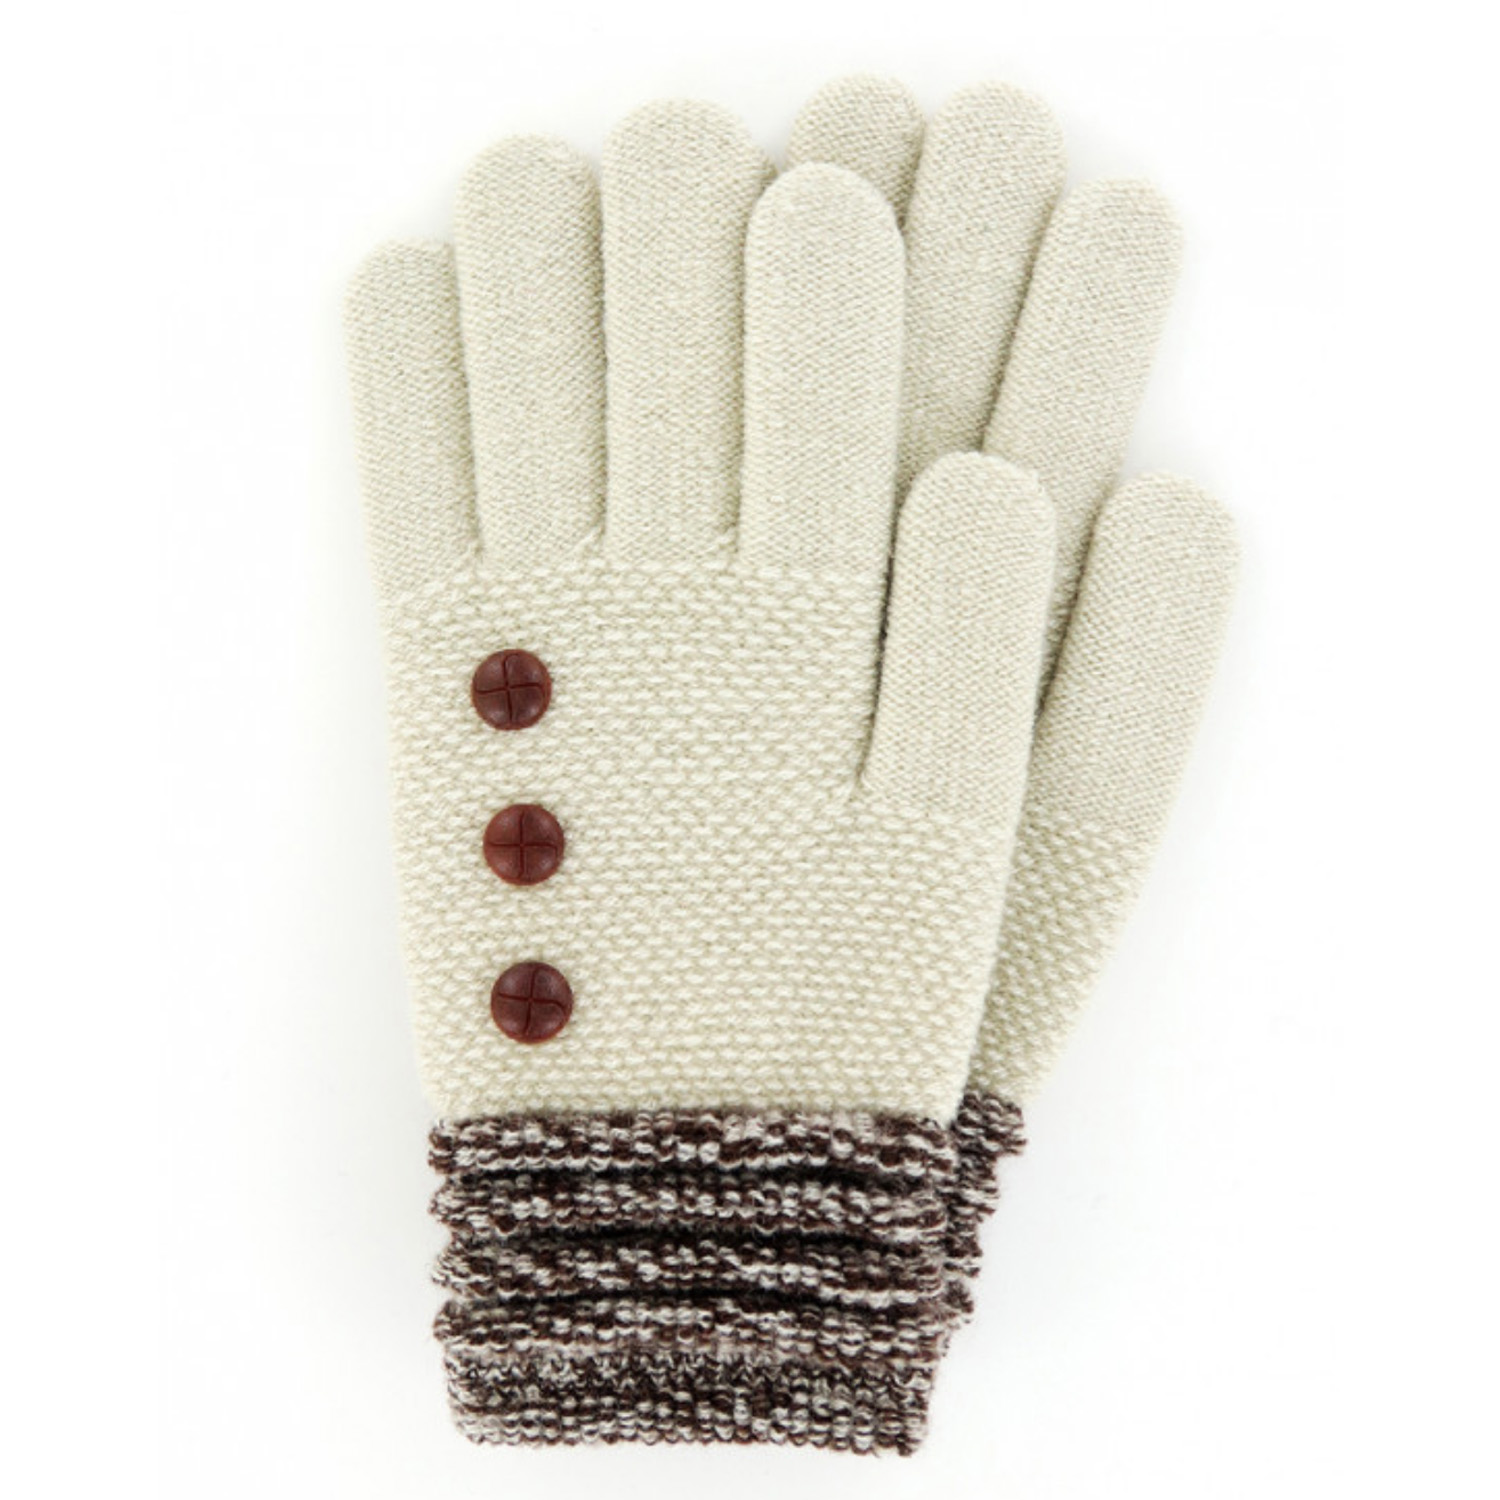 Britt's Knit's Knit Gloves Ivory